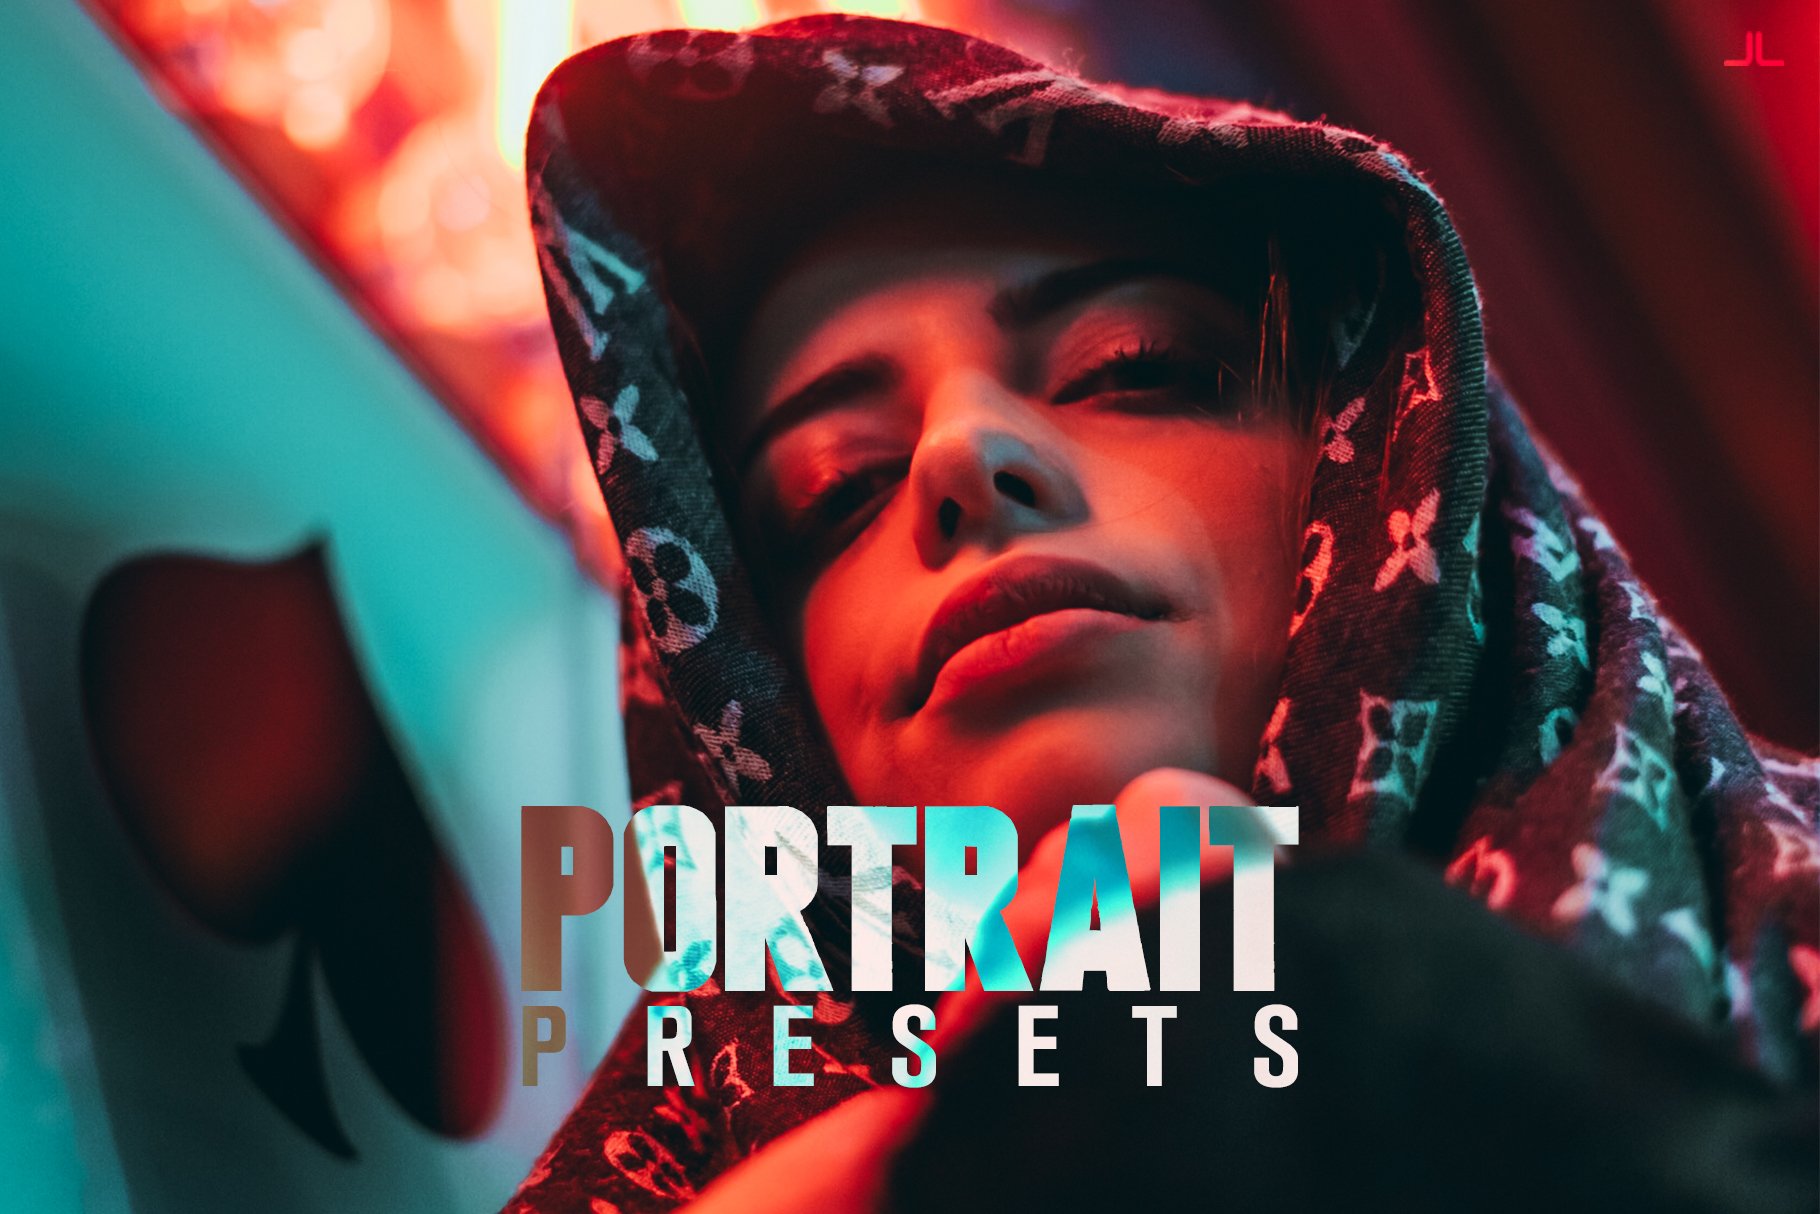 Portrait Presets (Mobile & Desktop)cover image.